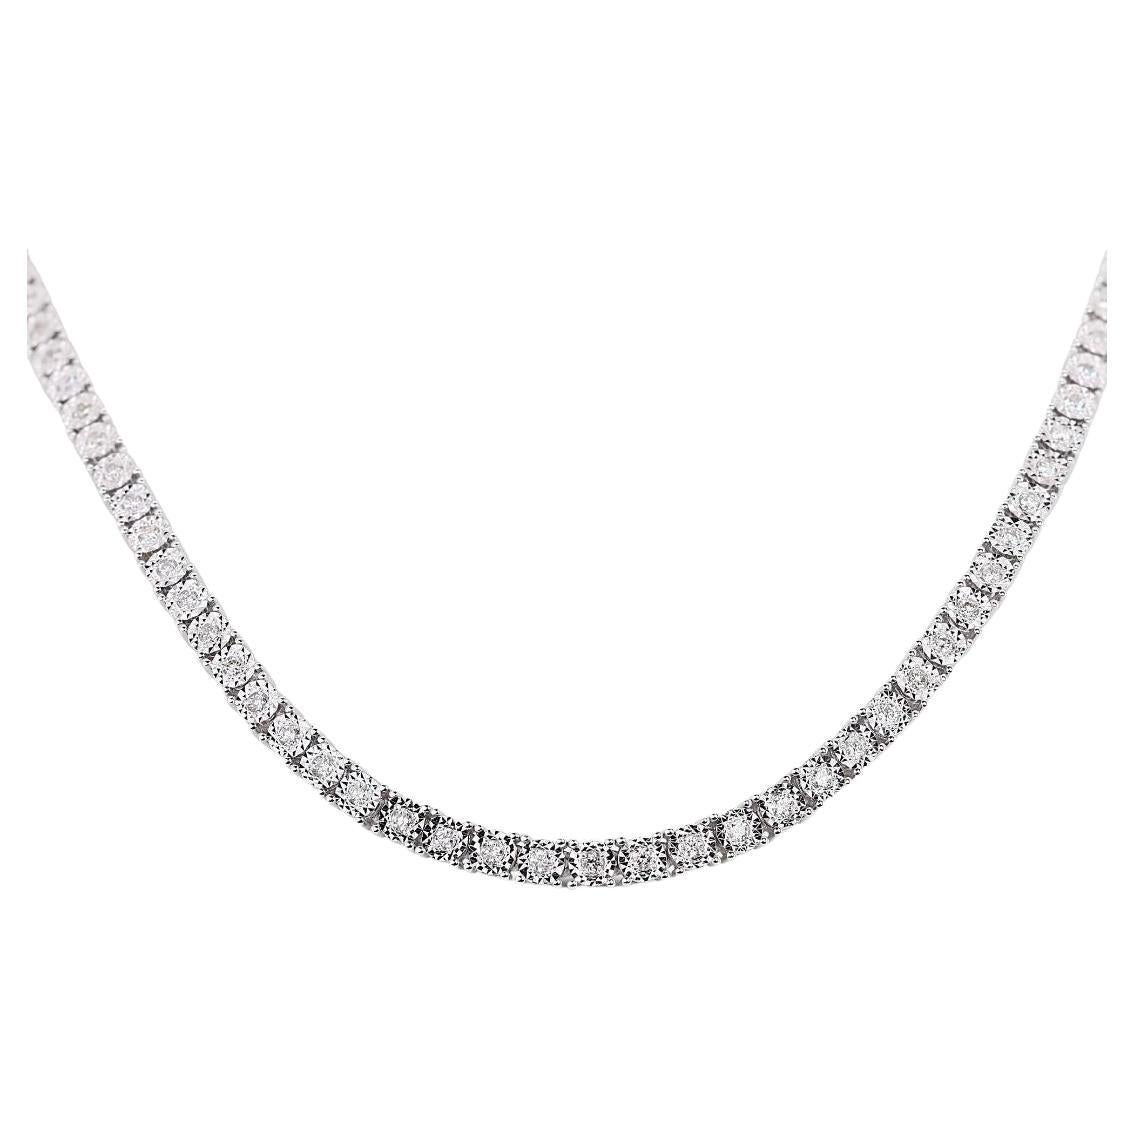 Elegant 1.74ct Round Brilliant Natural Diamond Necklace in 9K White Gold